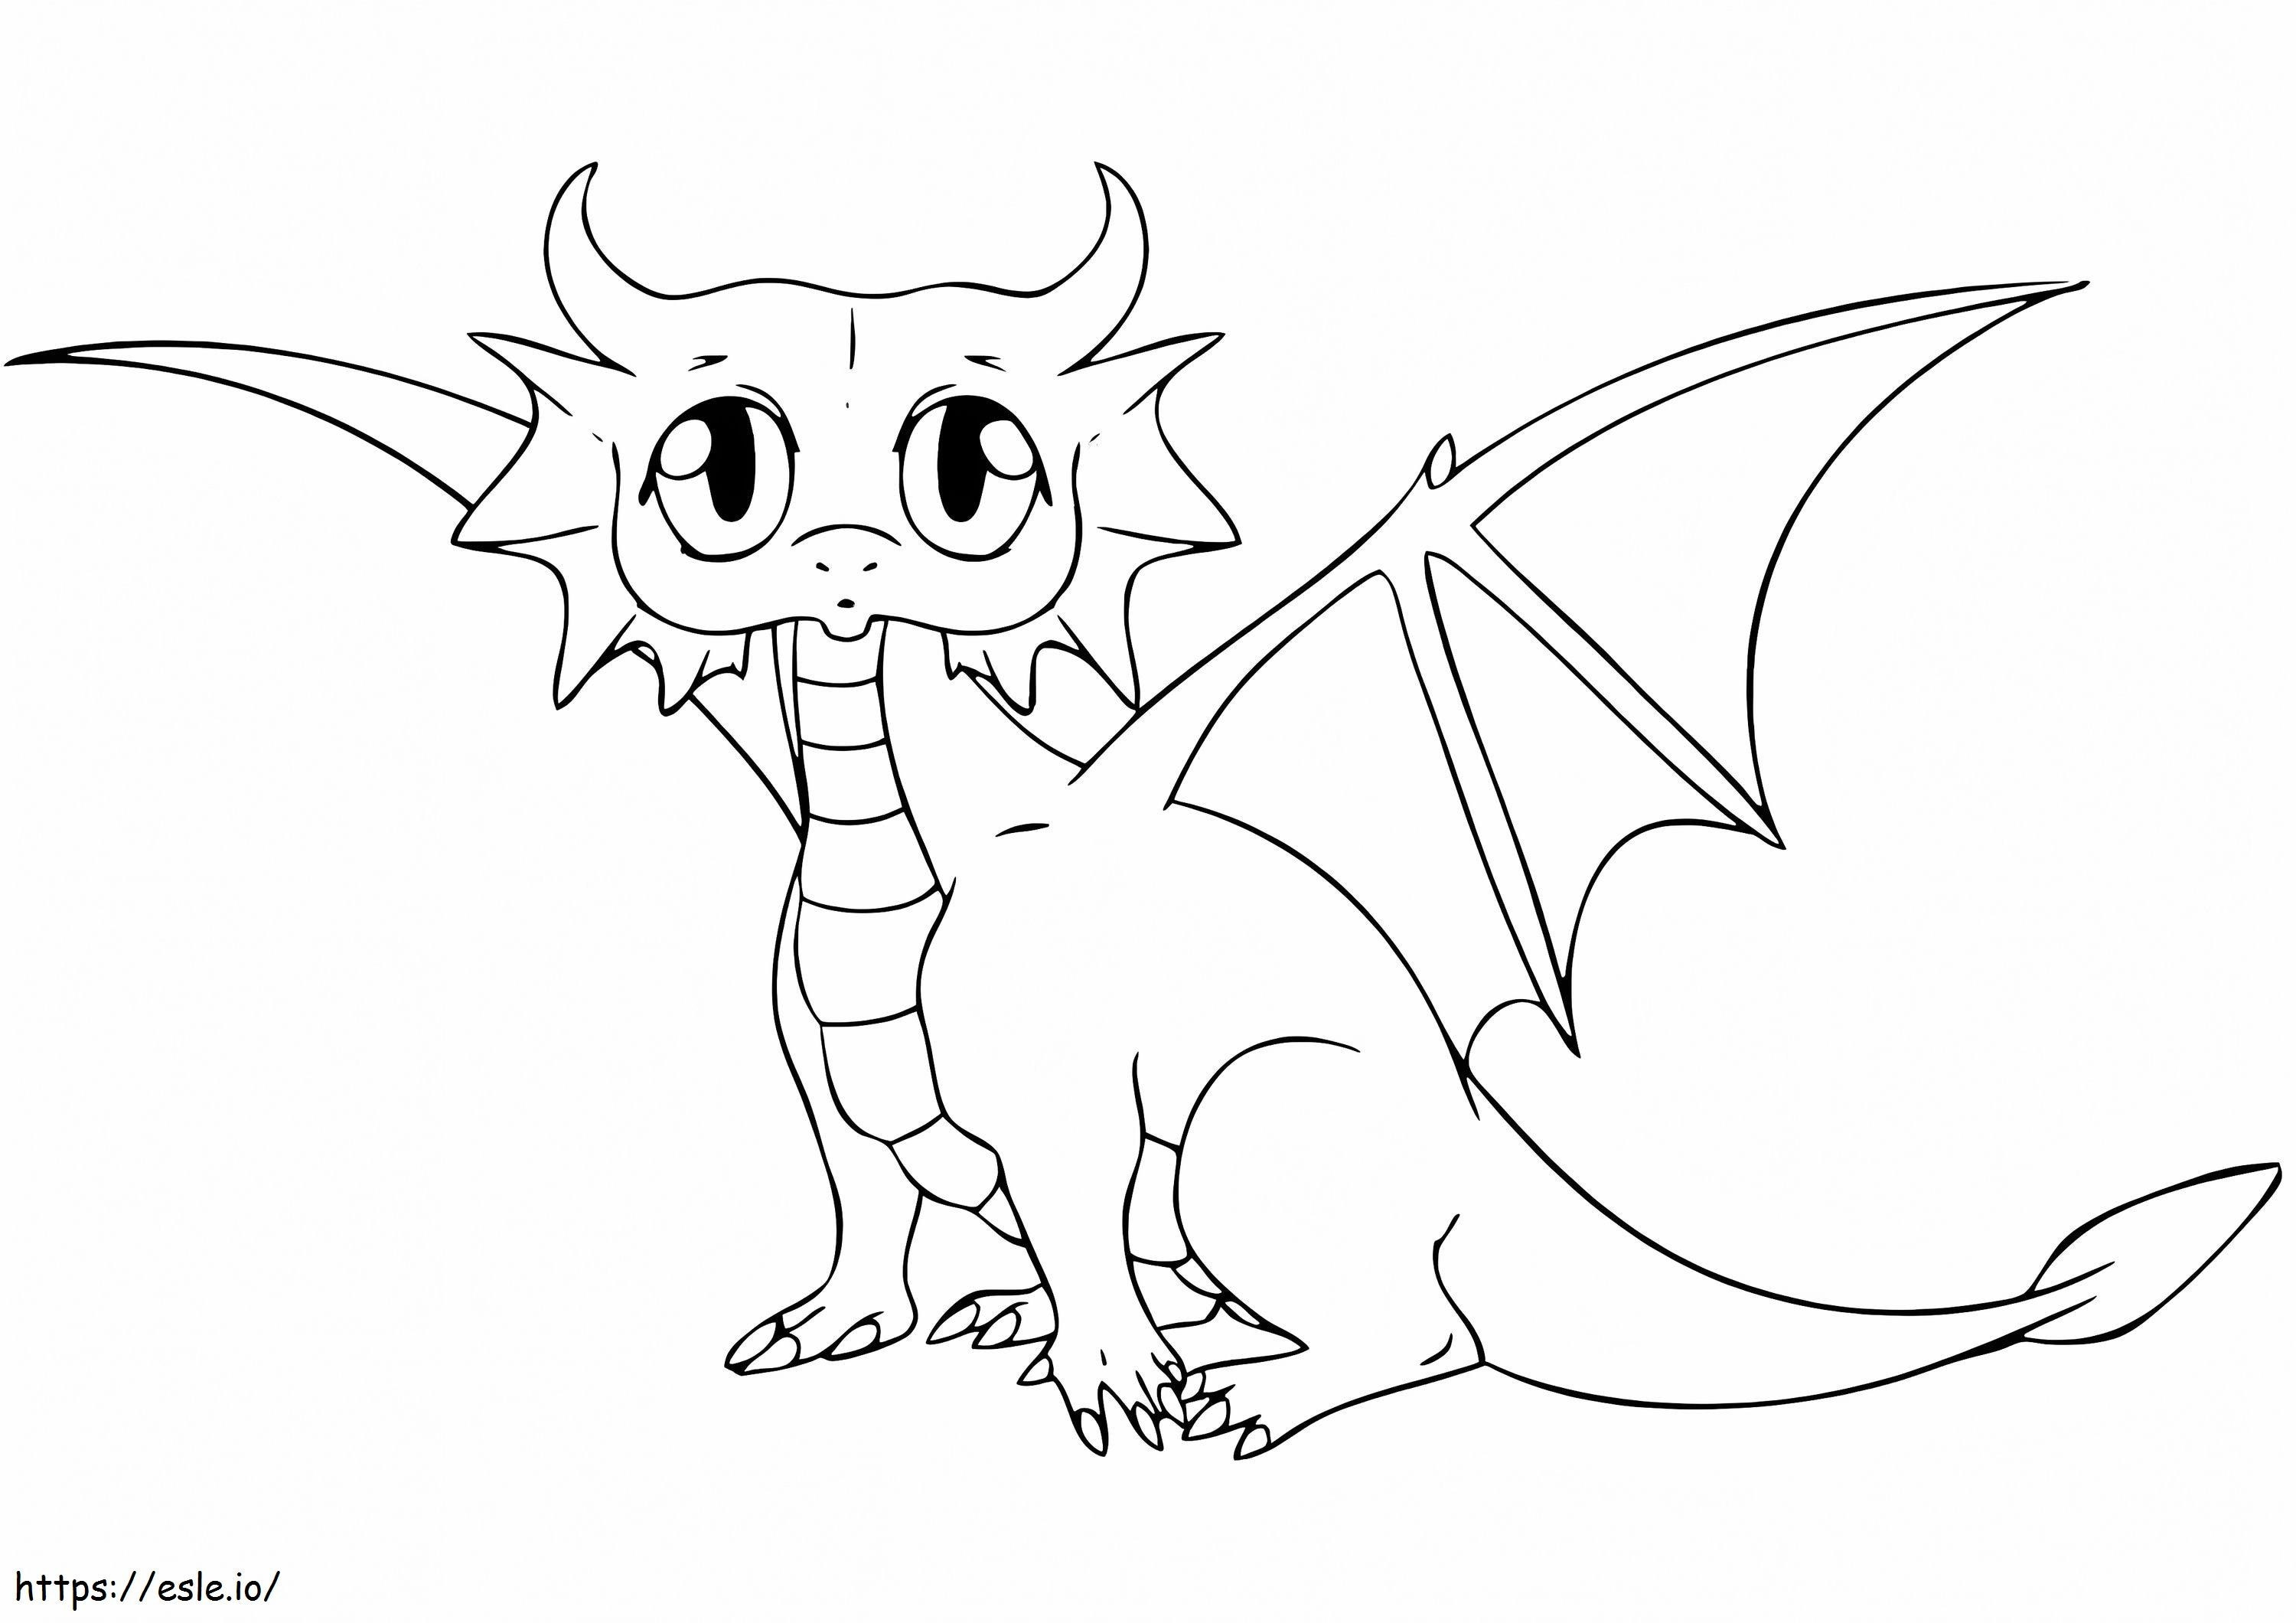 Adorable Dragon coloring page